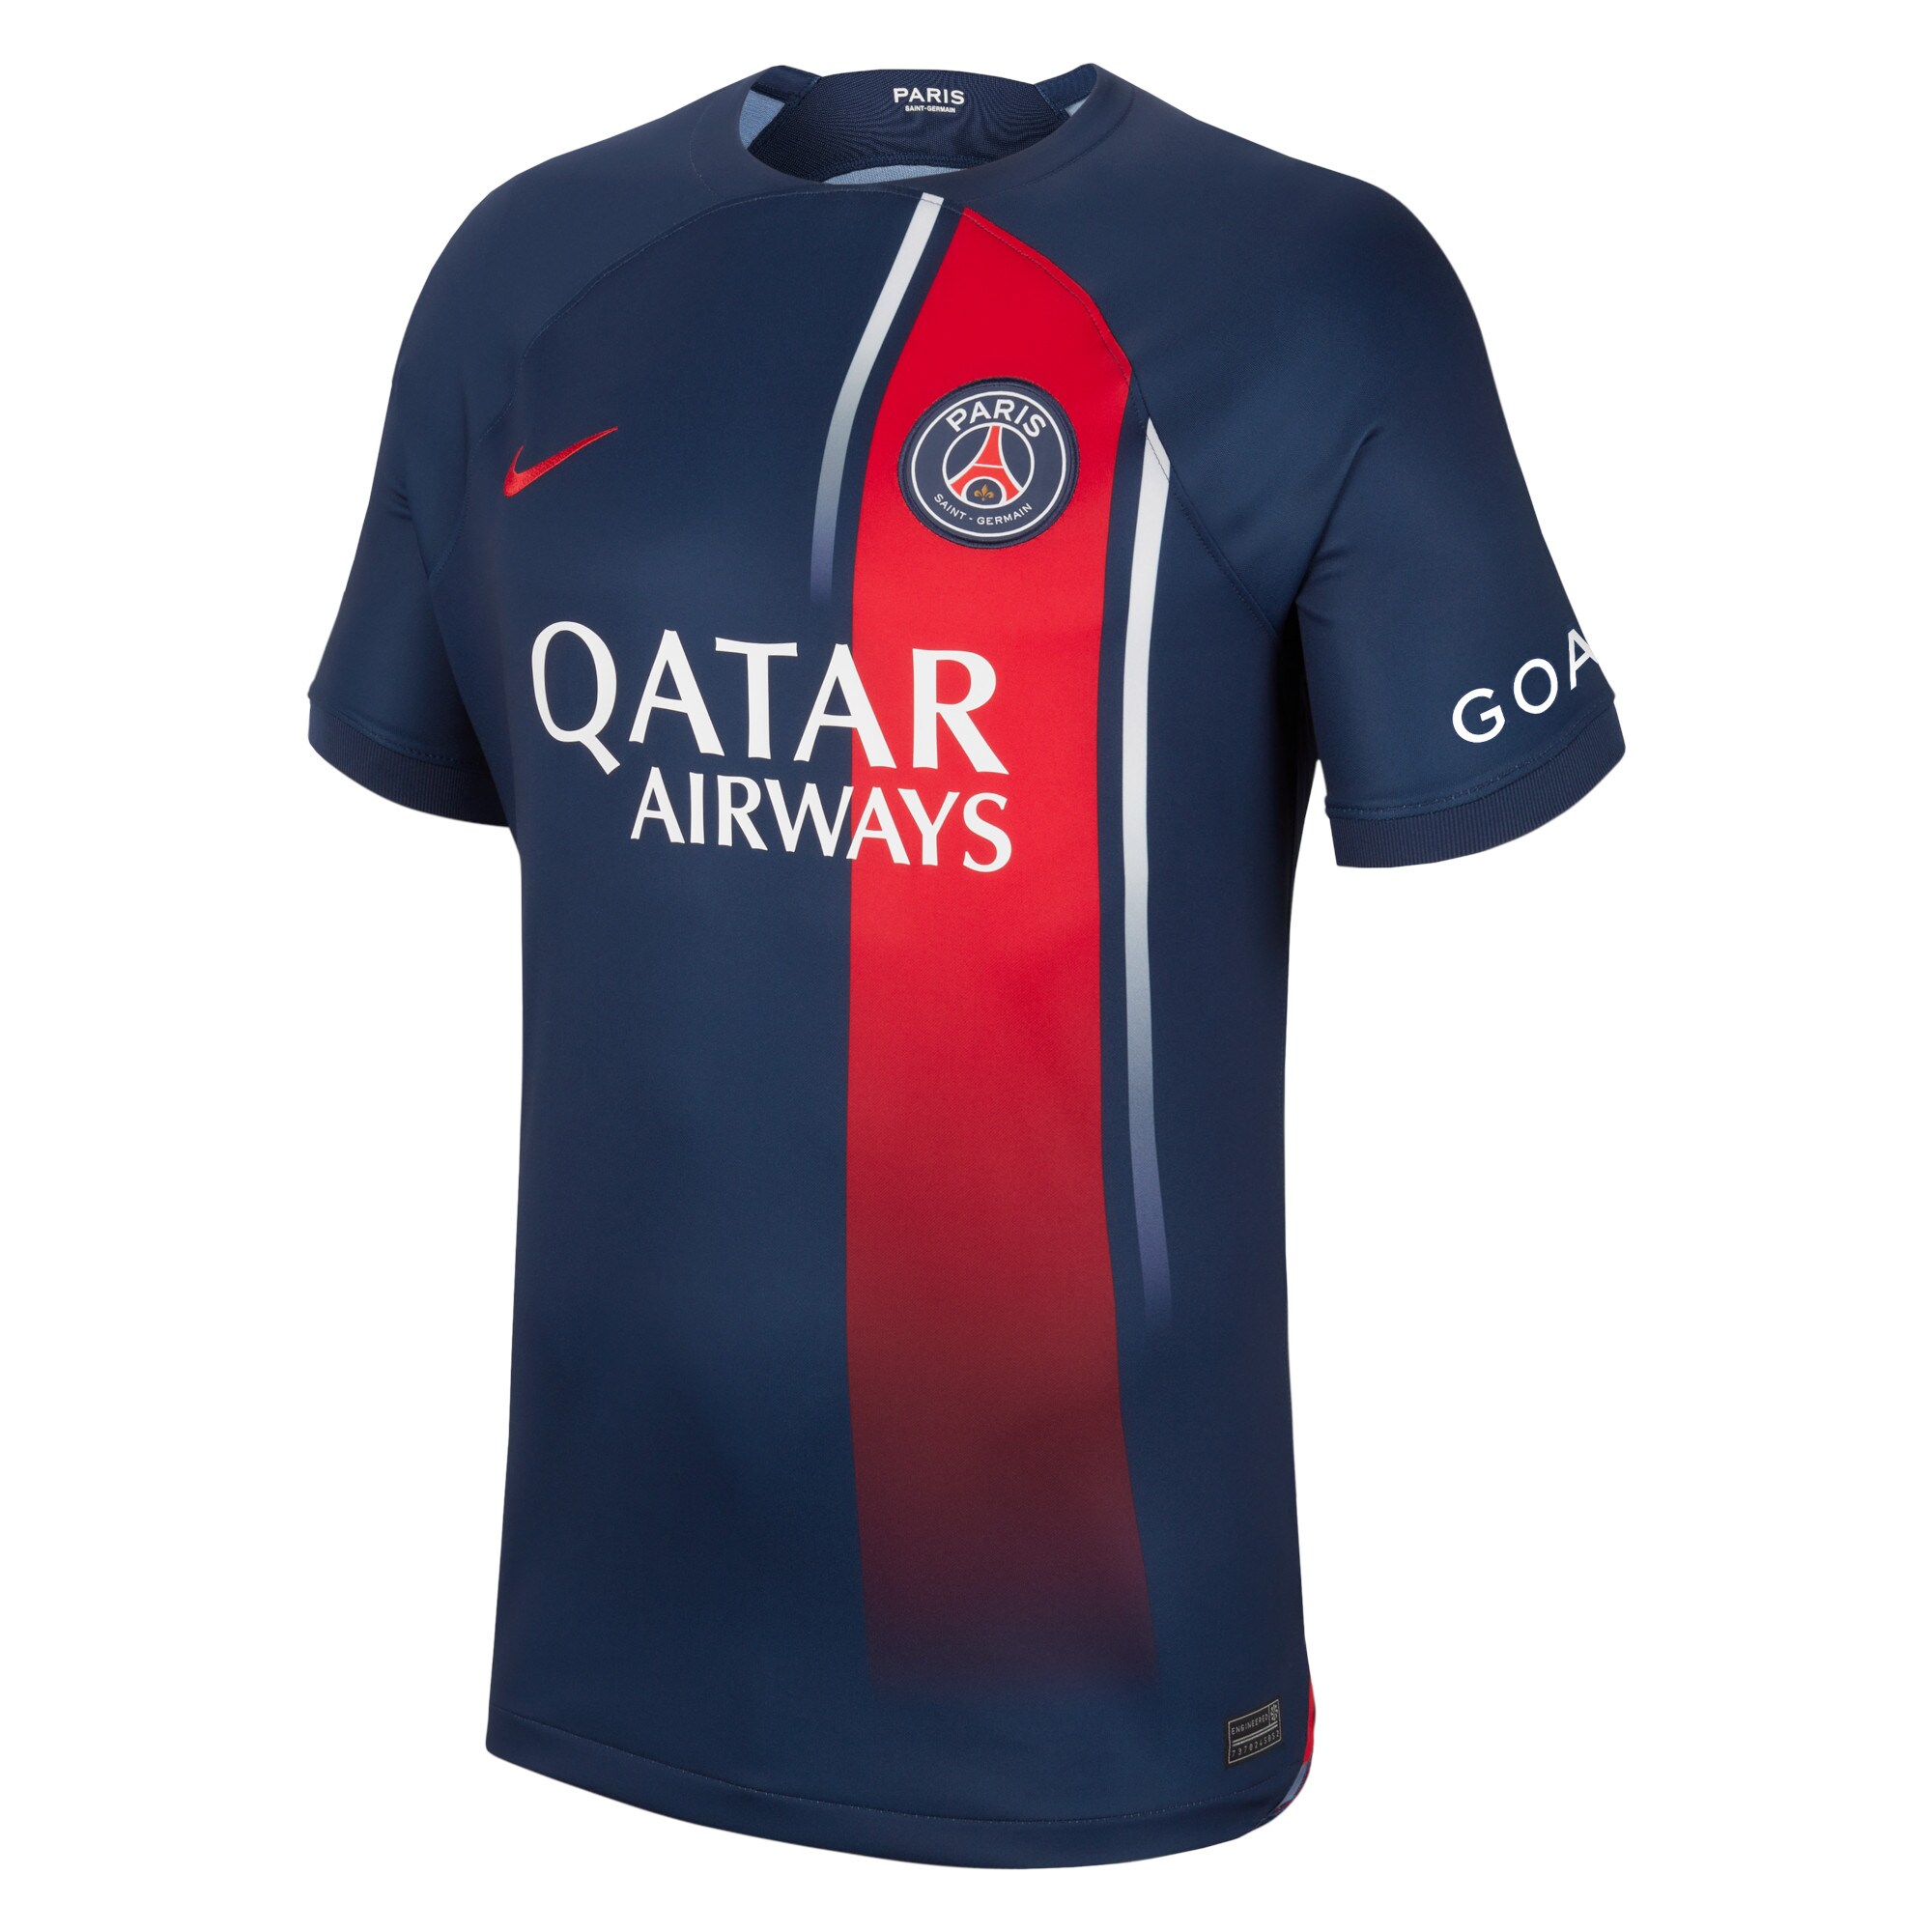 Paris Saint-Germain Home Stadium Shirt 2023-24 with R.Sanches 18 printing